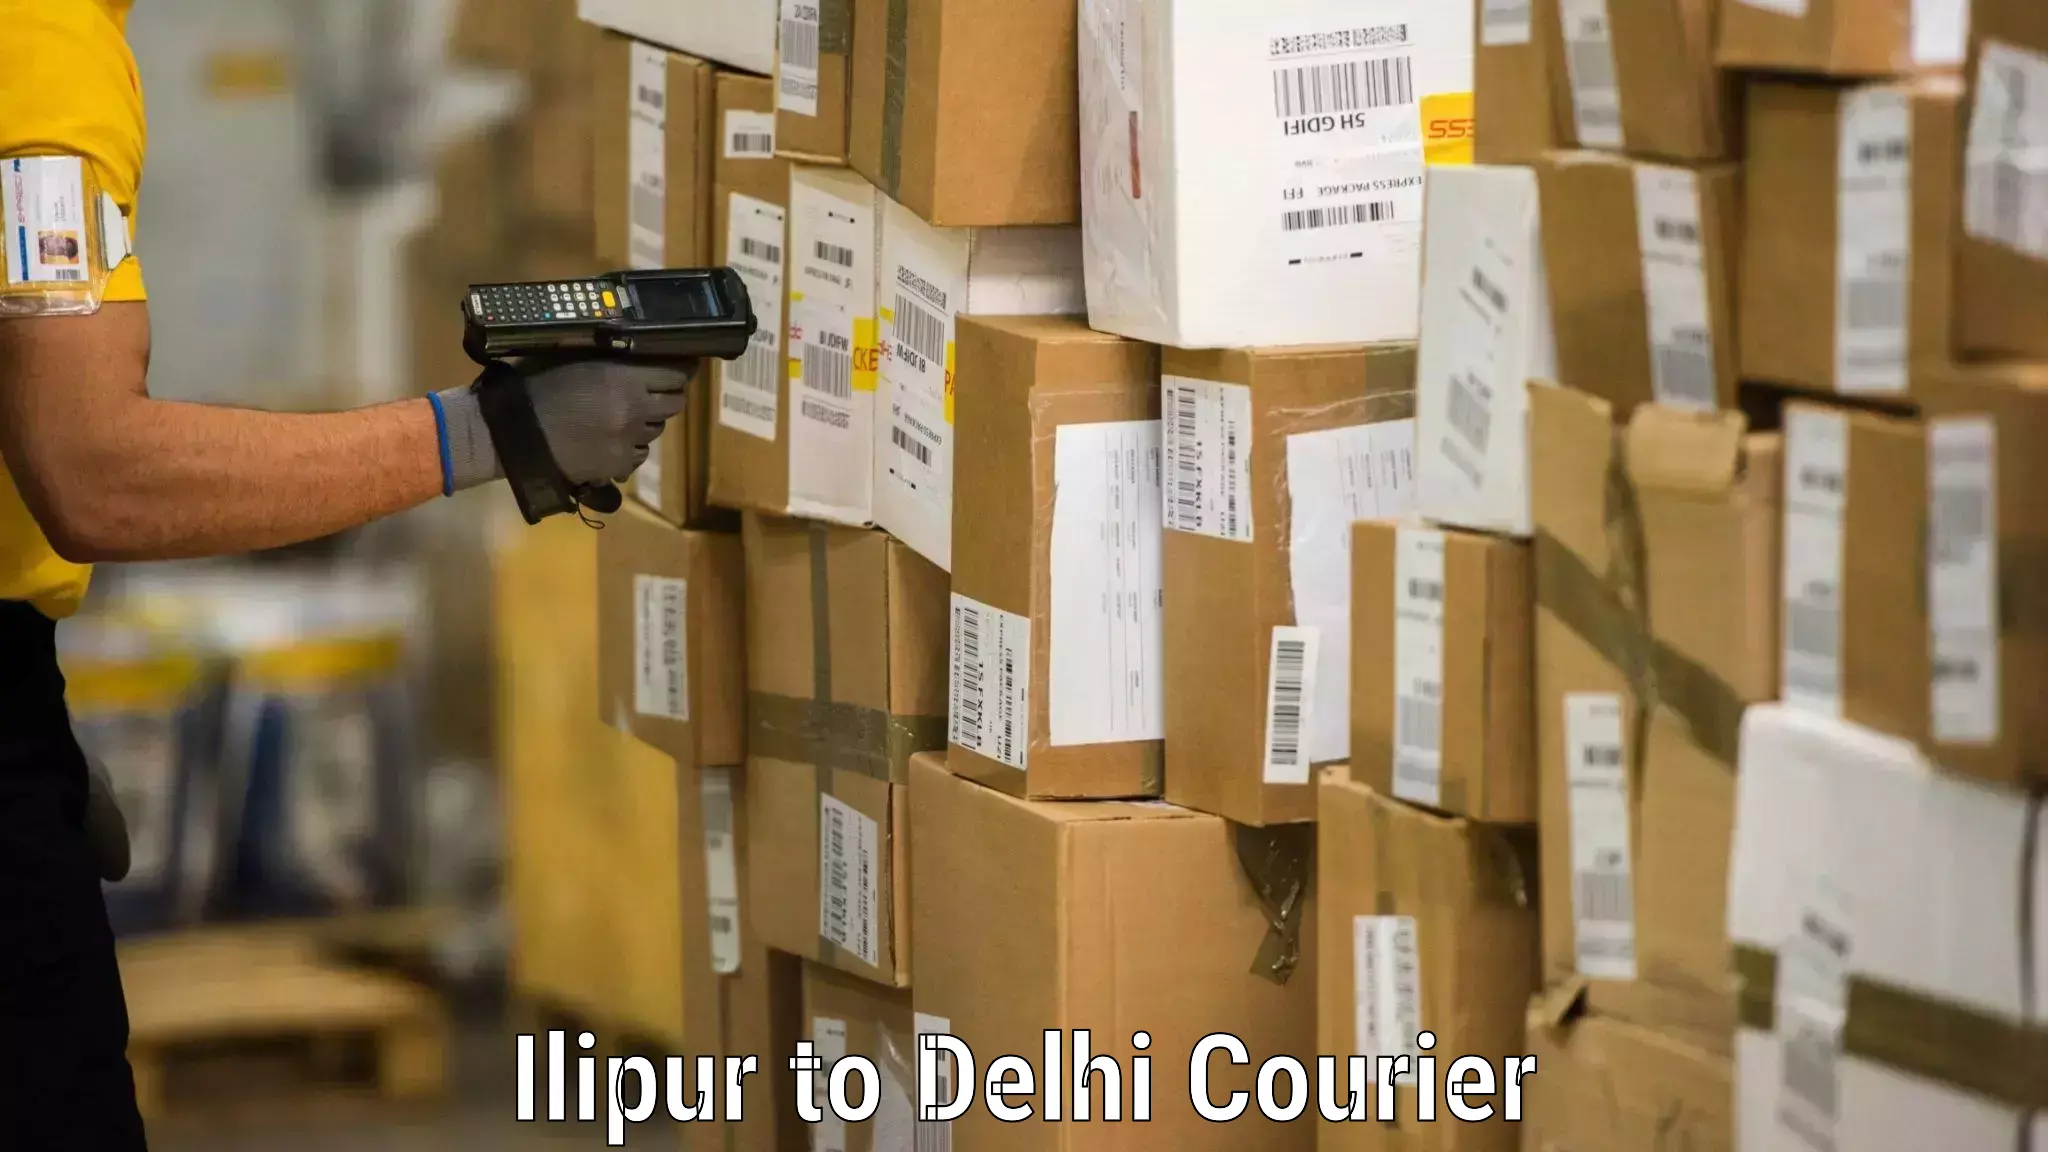 Budget-friendly movers Ilipur to Delhi